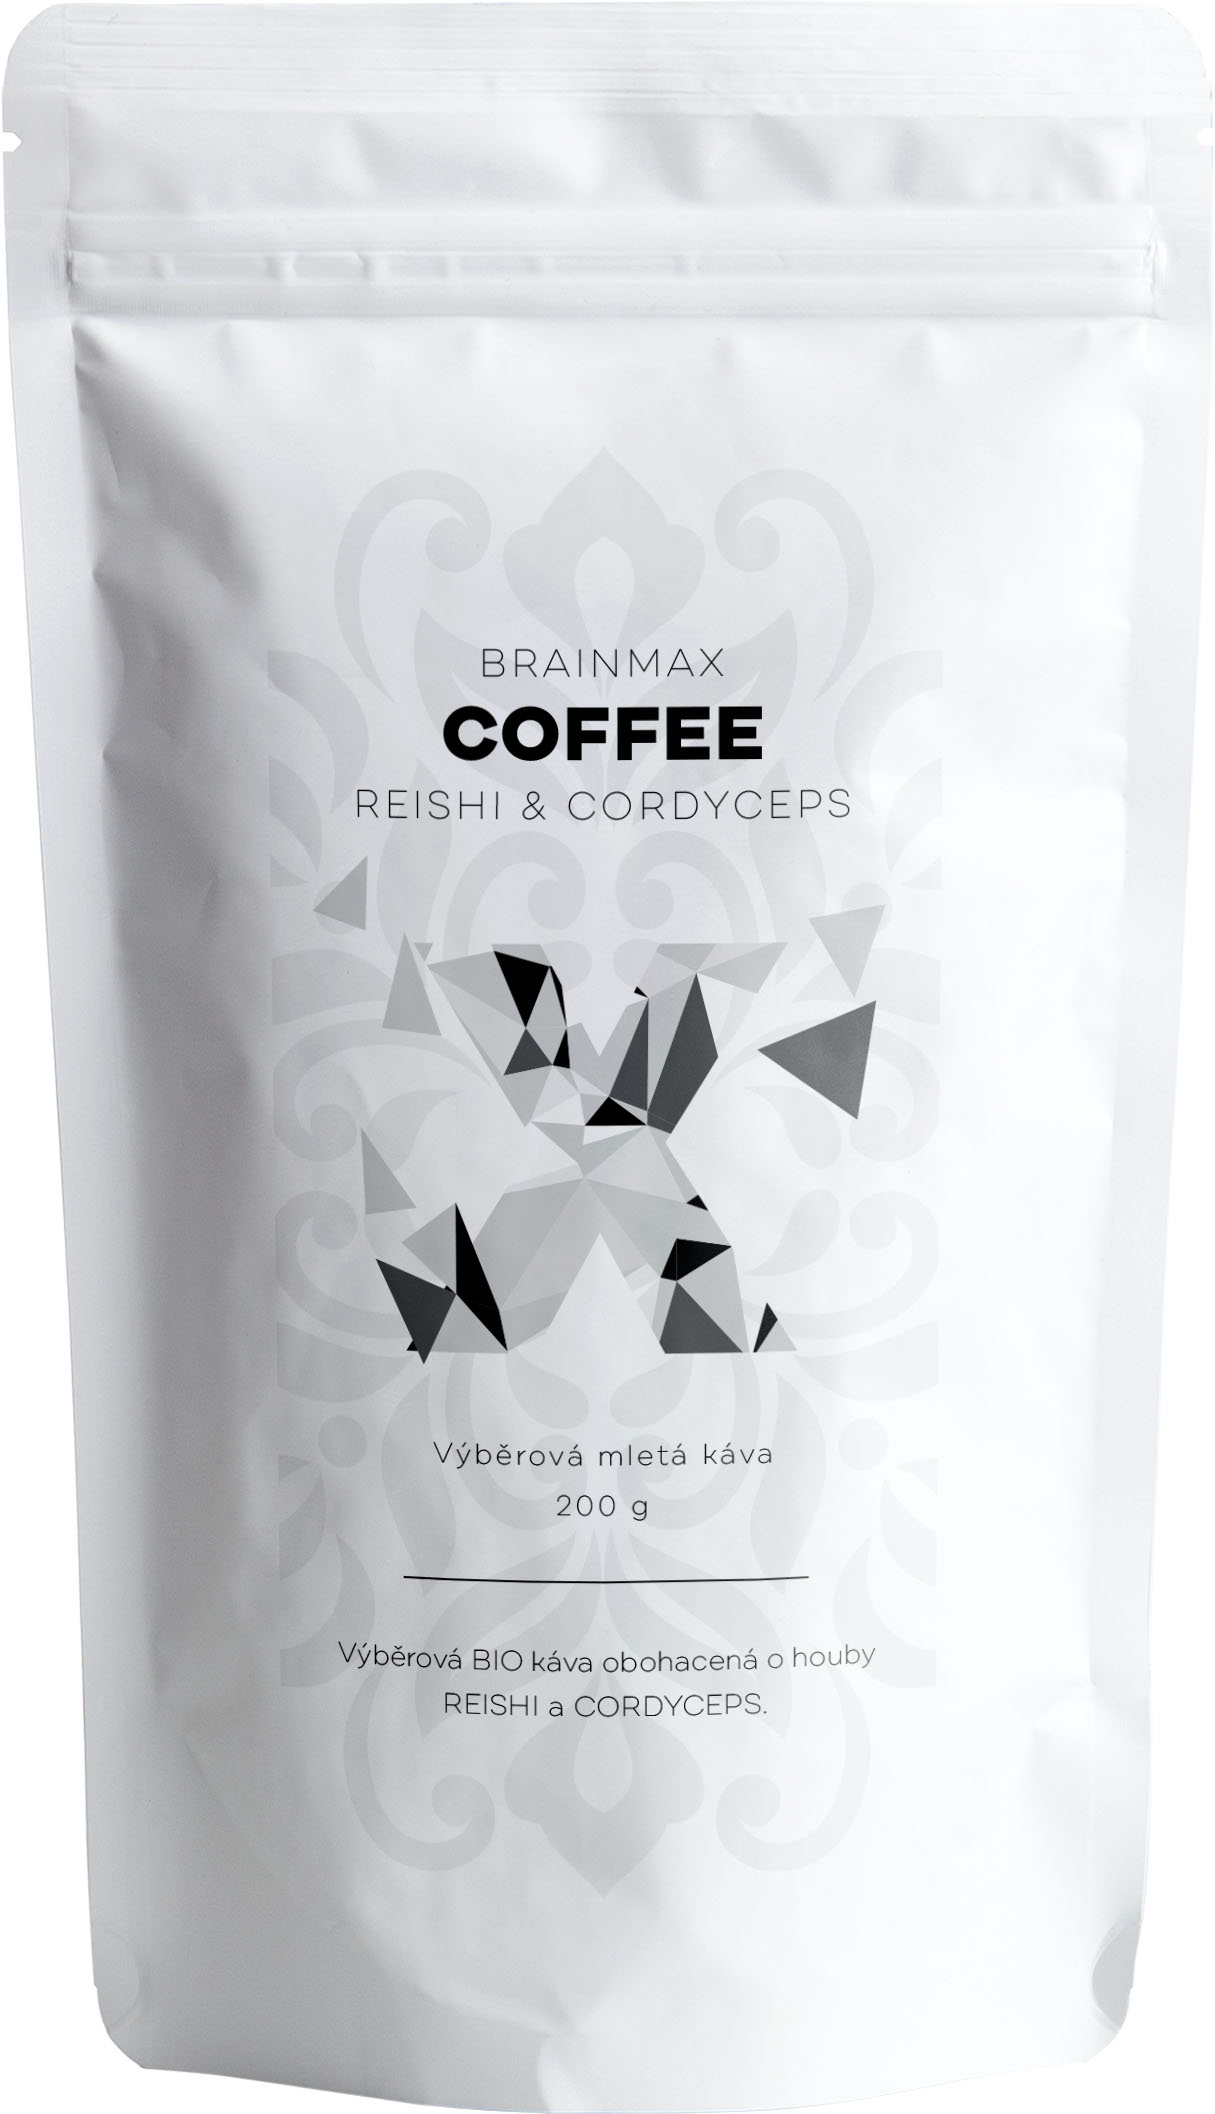 BrainMax Coffee Reishi & Cordyceps, káva s vitálními houbami, BIO, 200g *CZ-BIO-001 certifikát / Výběrová BIO arabica s extrakty z Reishi a Cordyceps sinensis